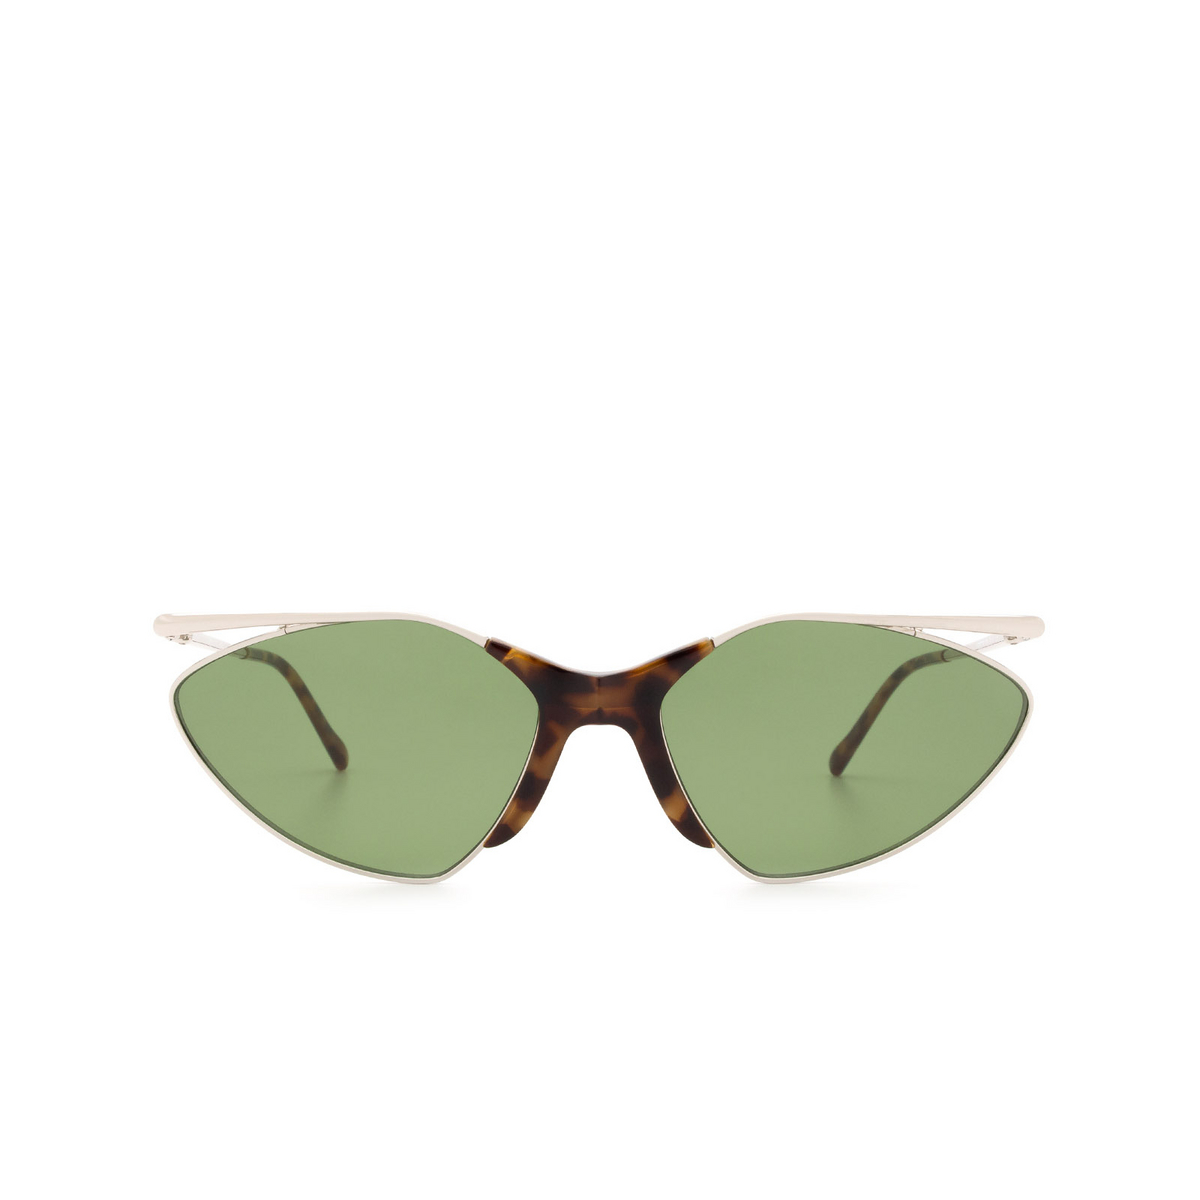 Sportmax® Cat-eye Sunglasses: SM0019 color Shiny Palladium 16N - front view.